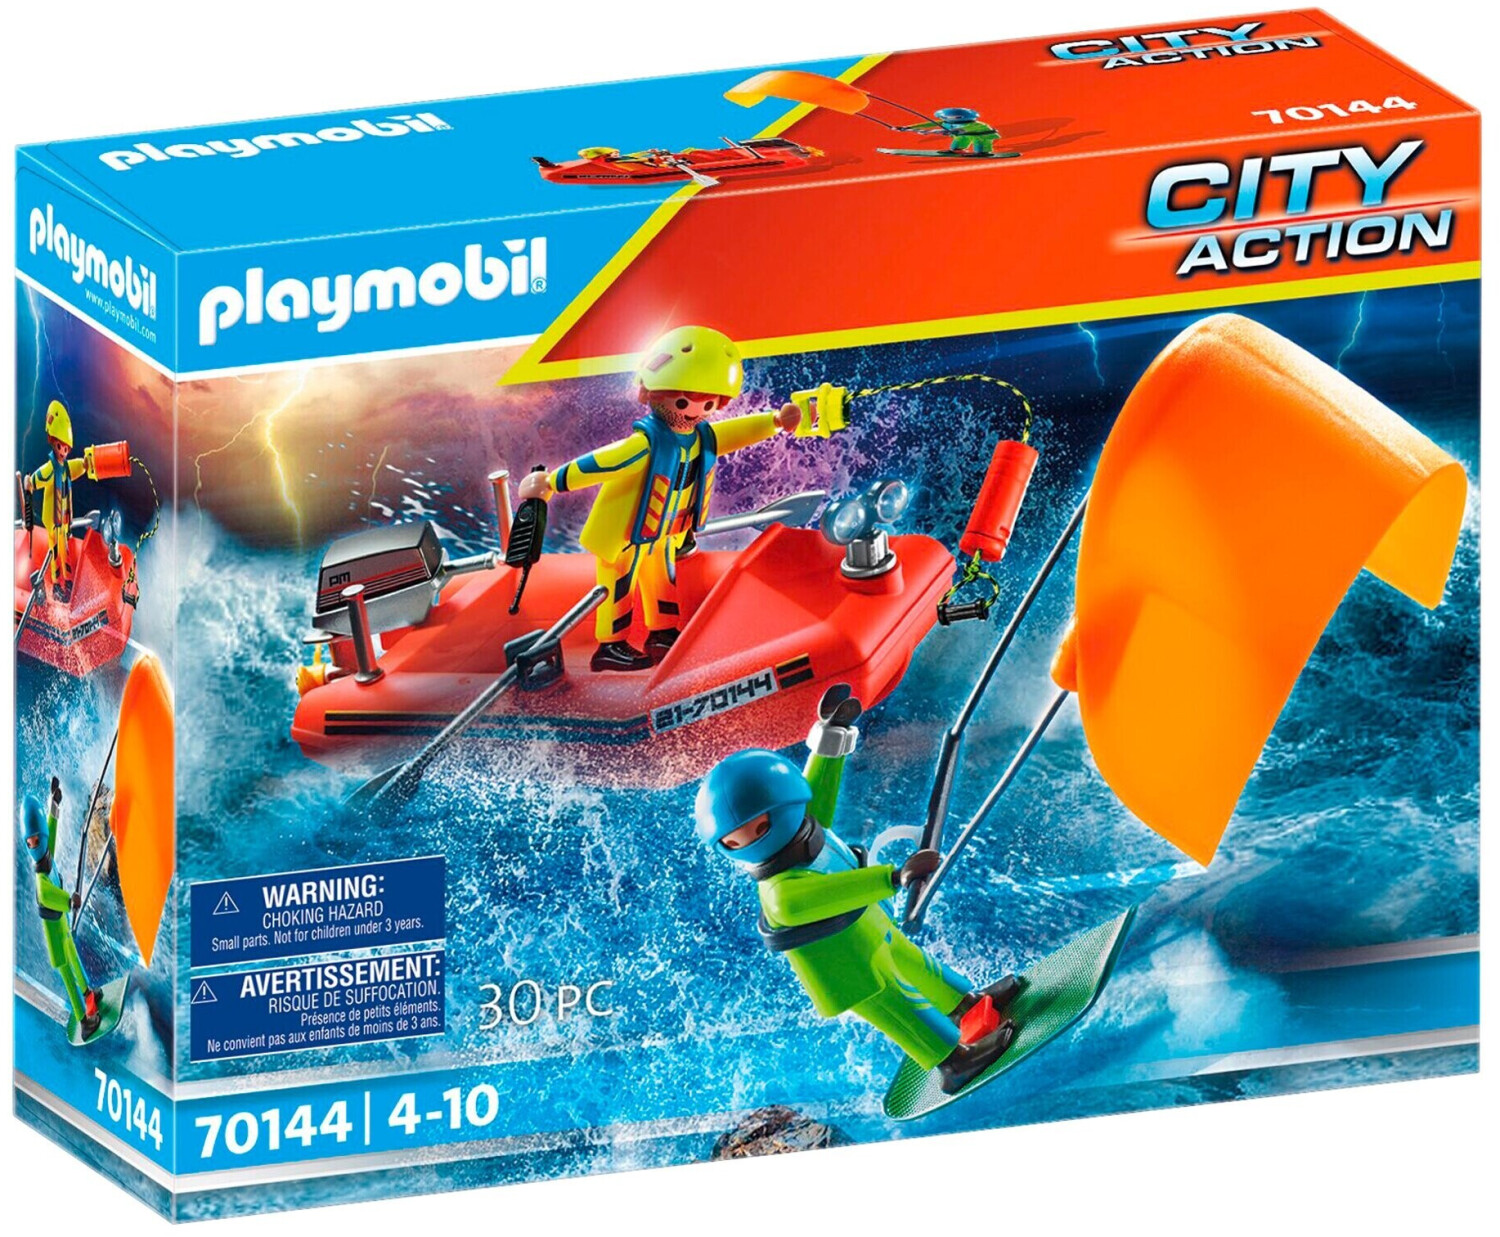 Playmobil - Secouriste et Gyropode - 70052 Coloré